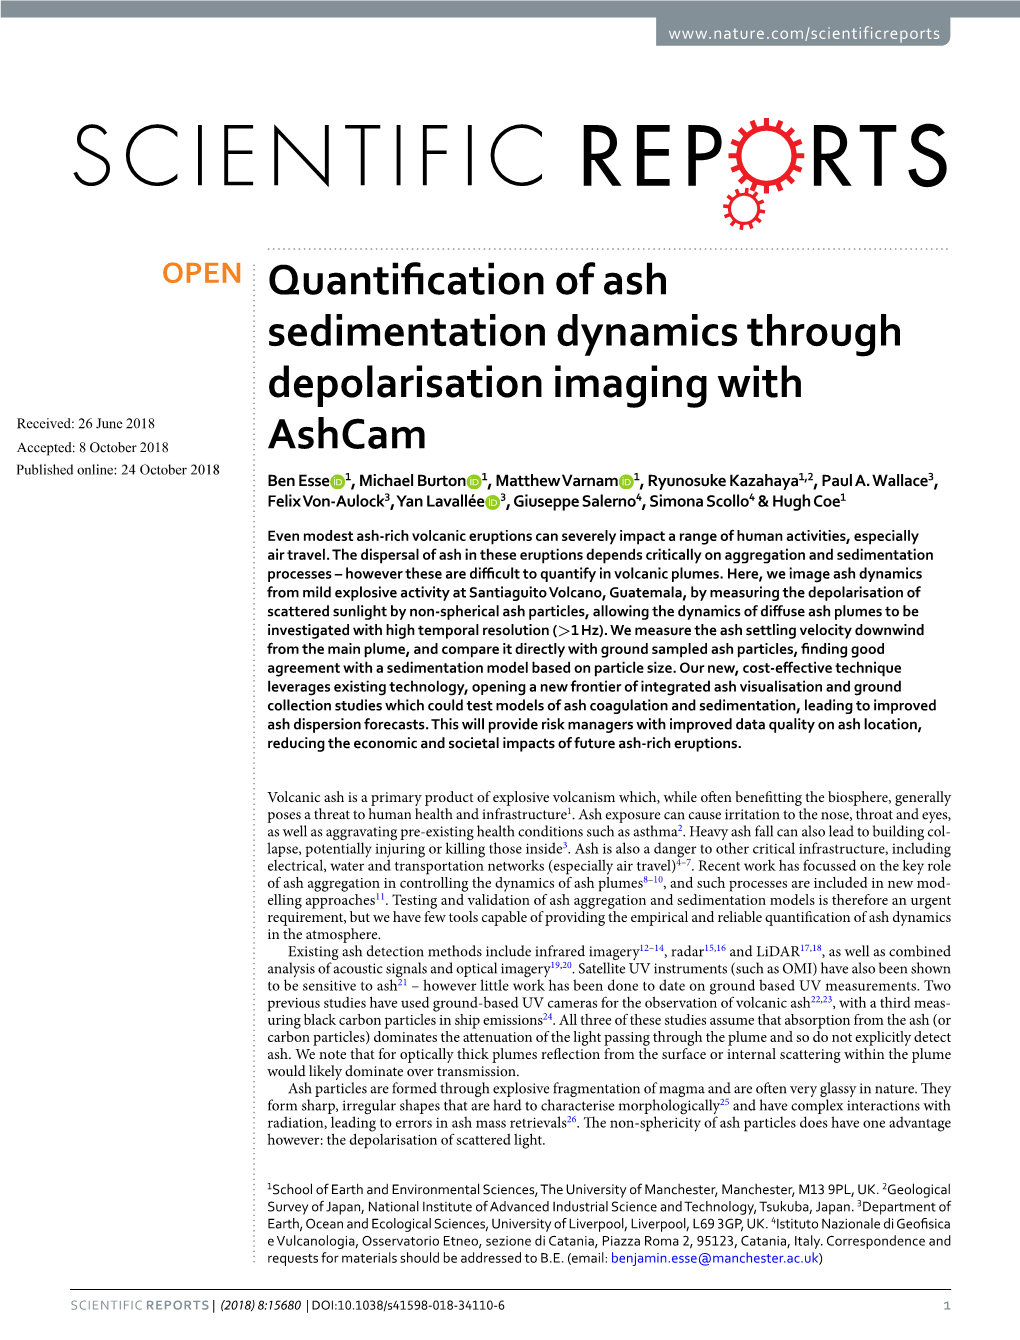 Quantification of Ash Sedimentation Dynamics Through Depolarisation